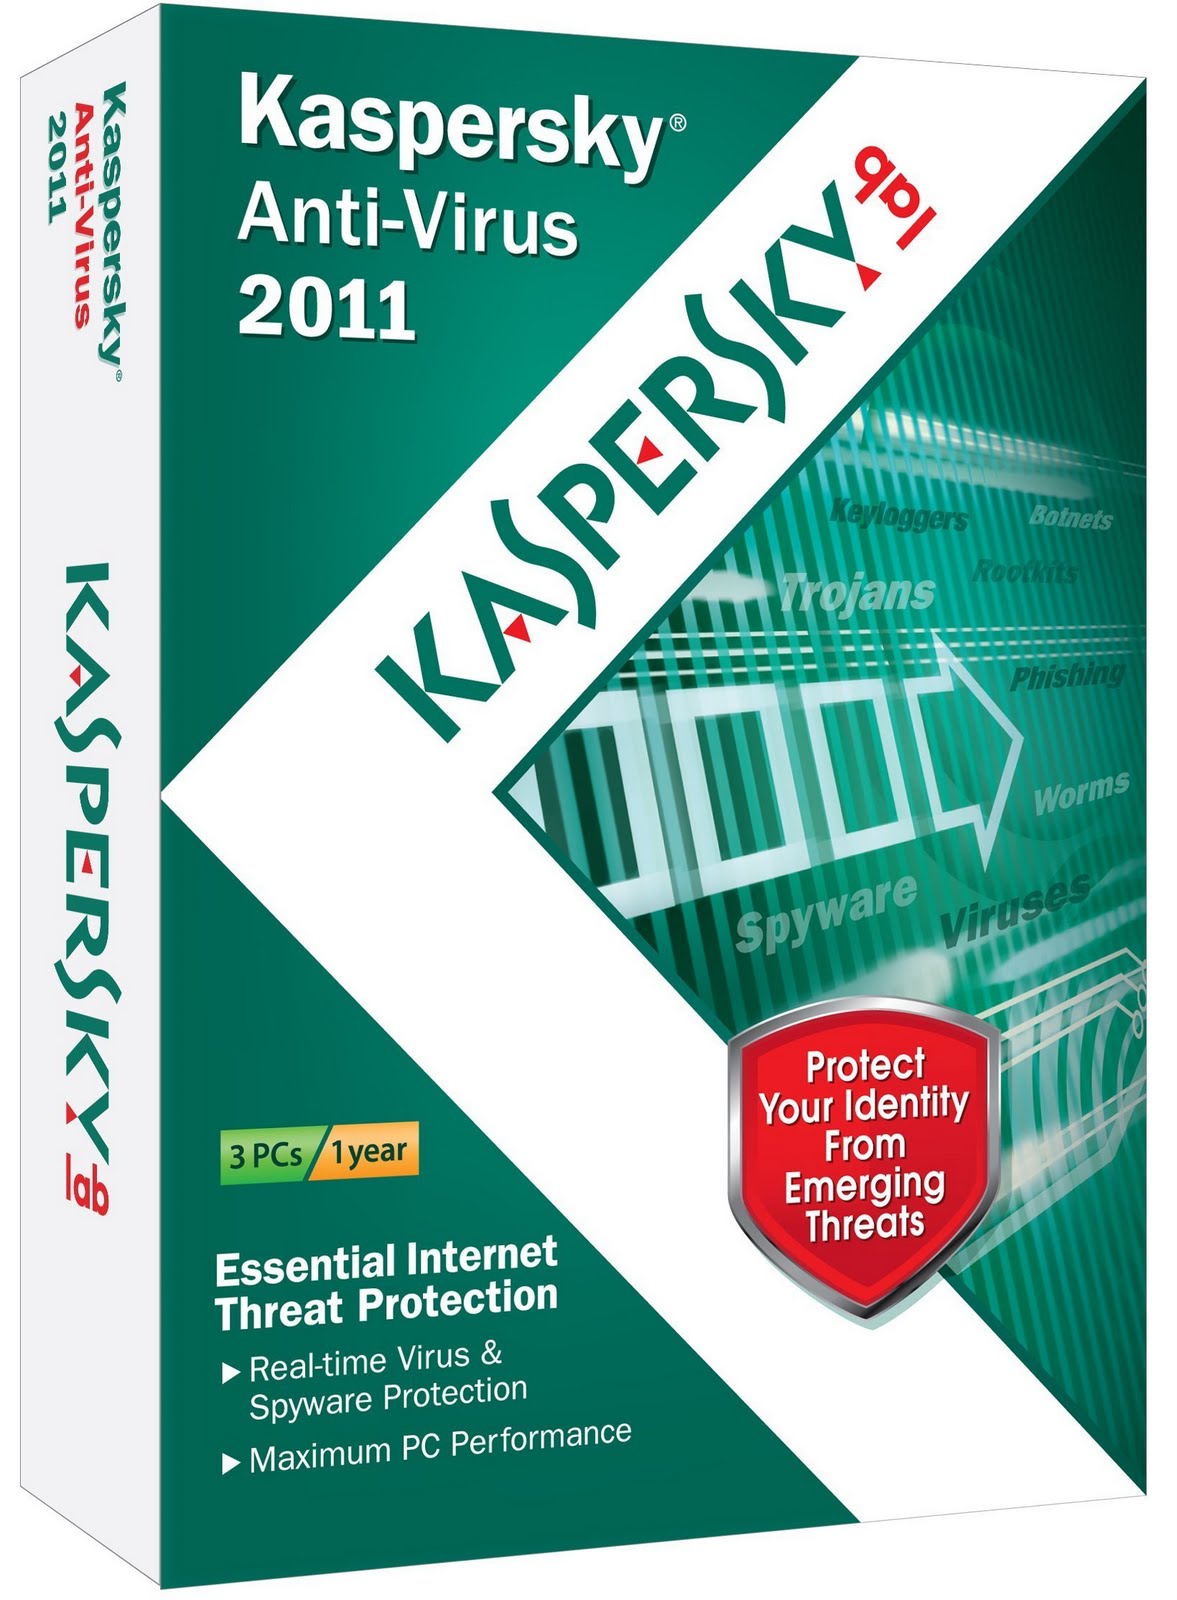 Myblog.wid: Kaspersky Antivirus 2011